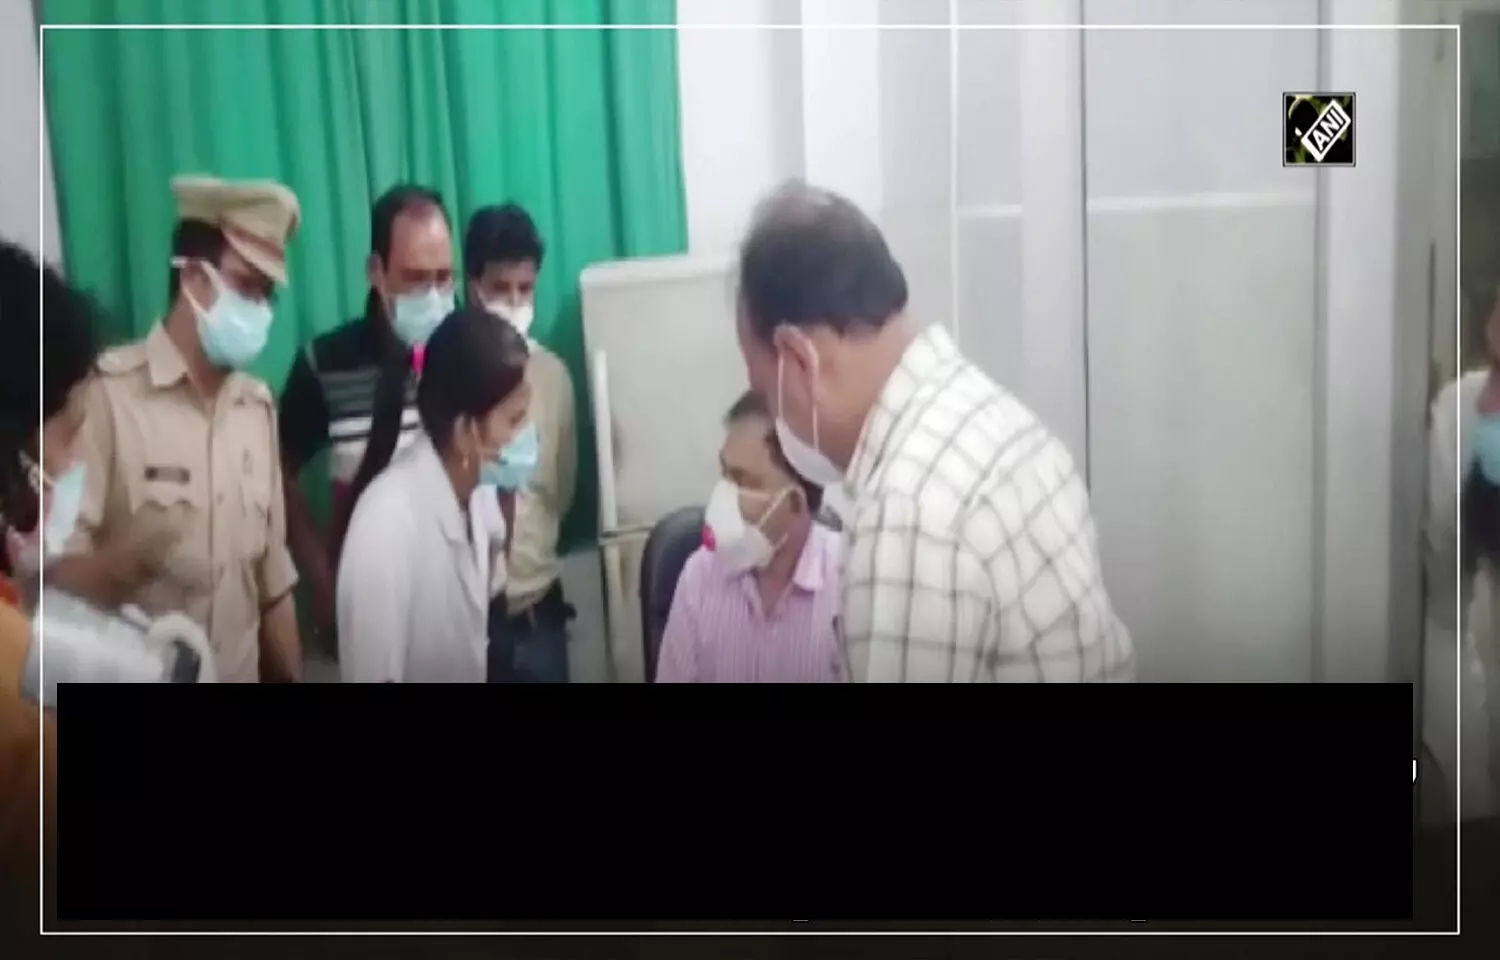 Overworked doctor, nurse slap each other at UP hospital